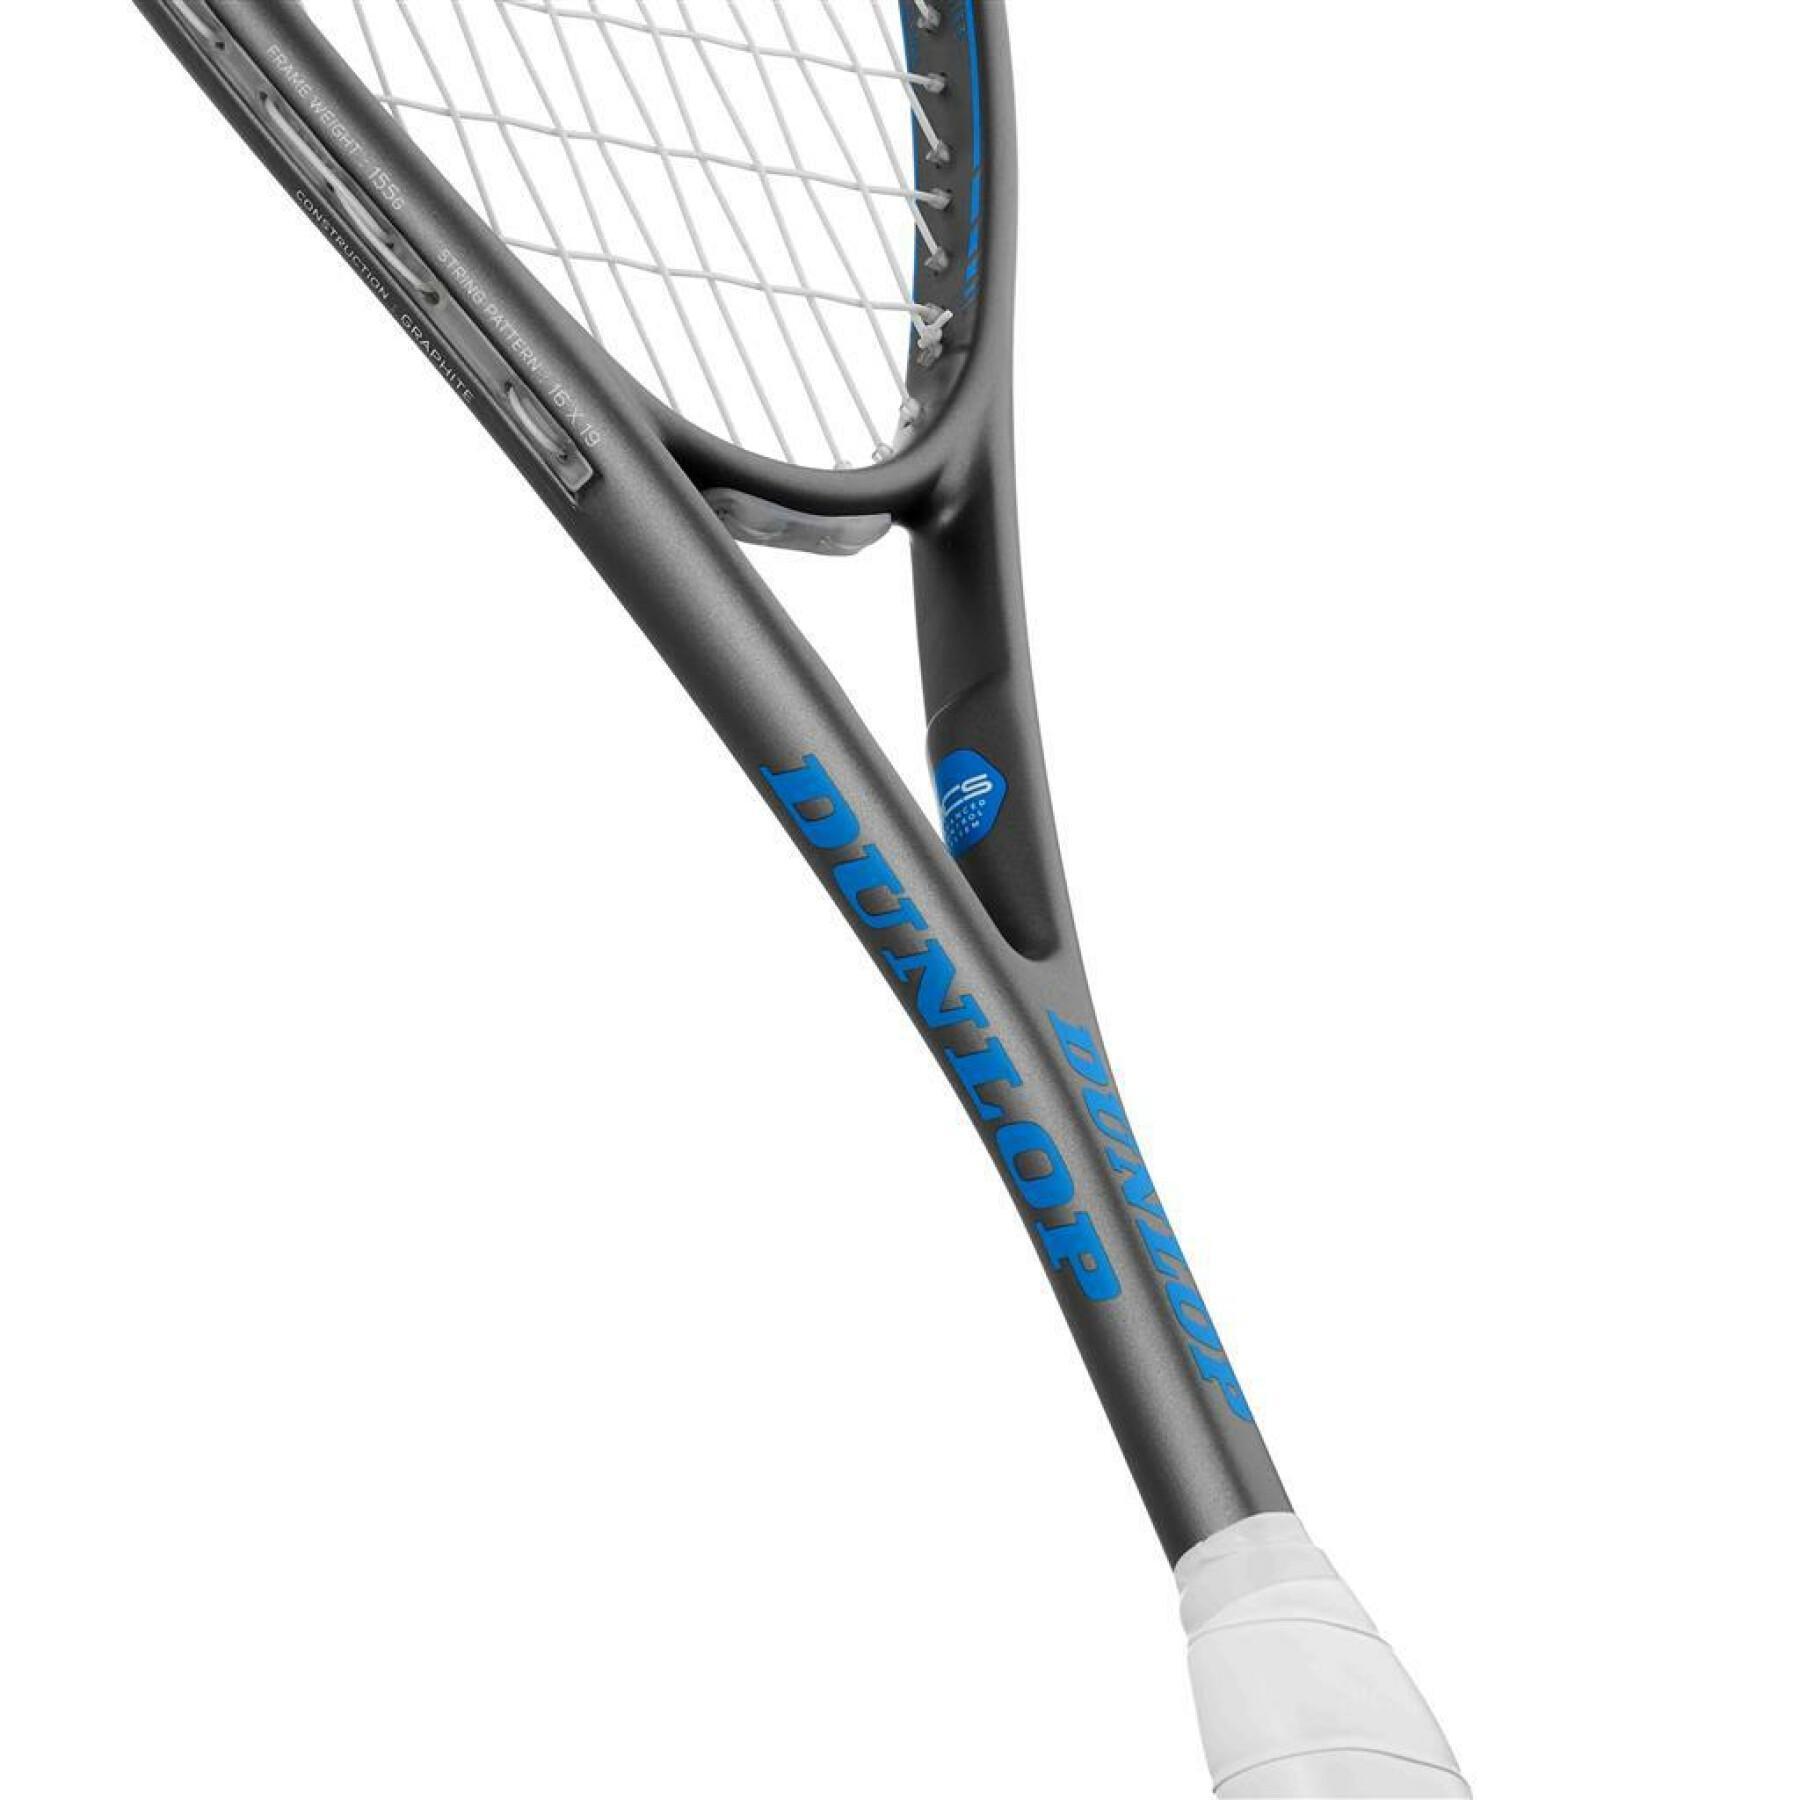 Racket Dunlop tempo elite 4.0